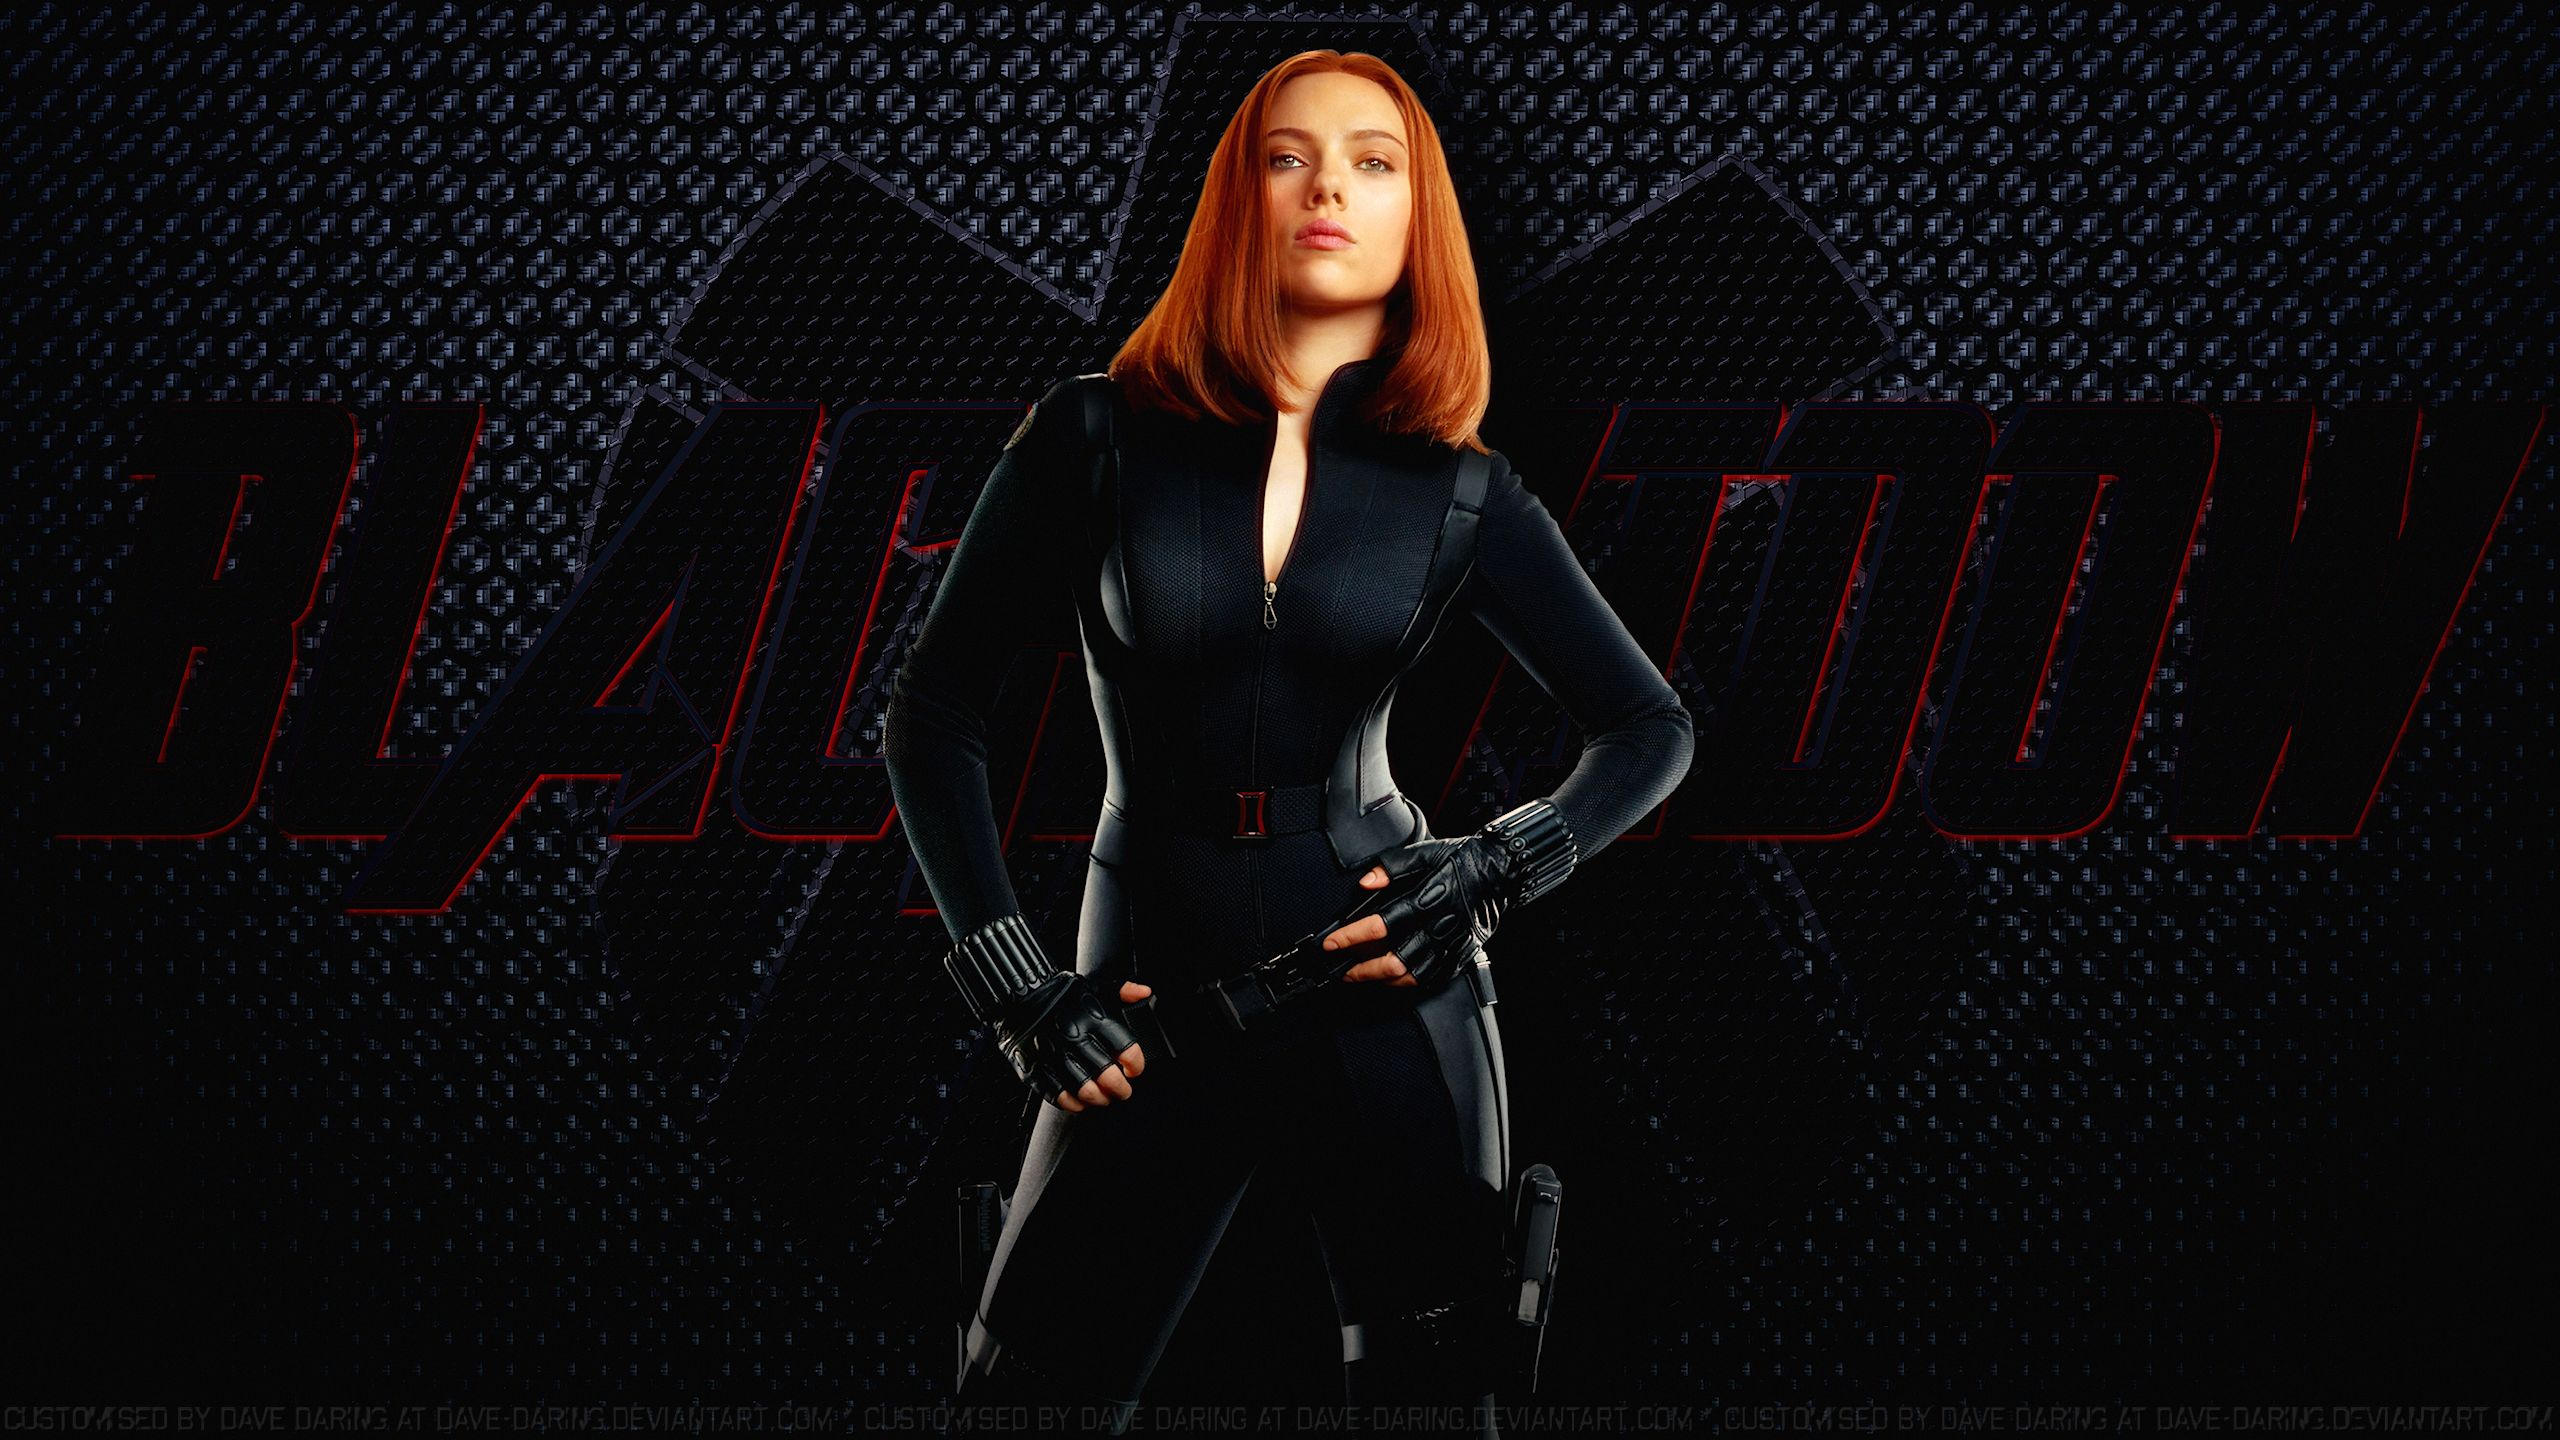 Scarlett Johansson Black Widow XVIII by Dave Daring on